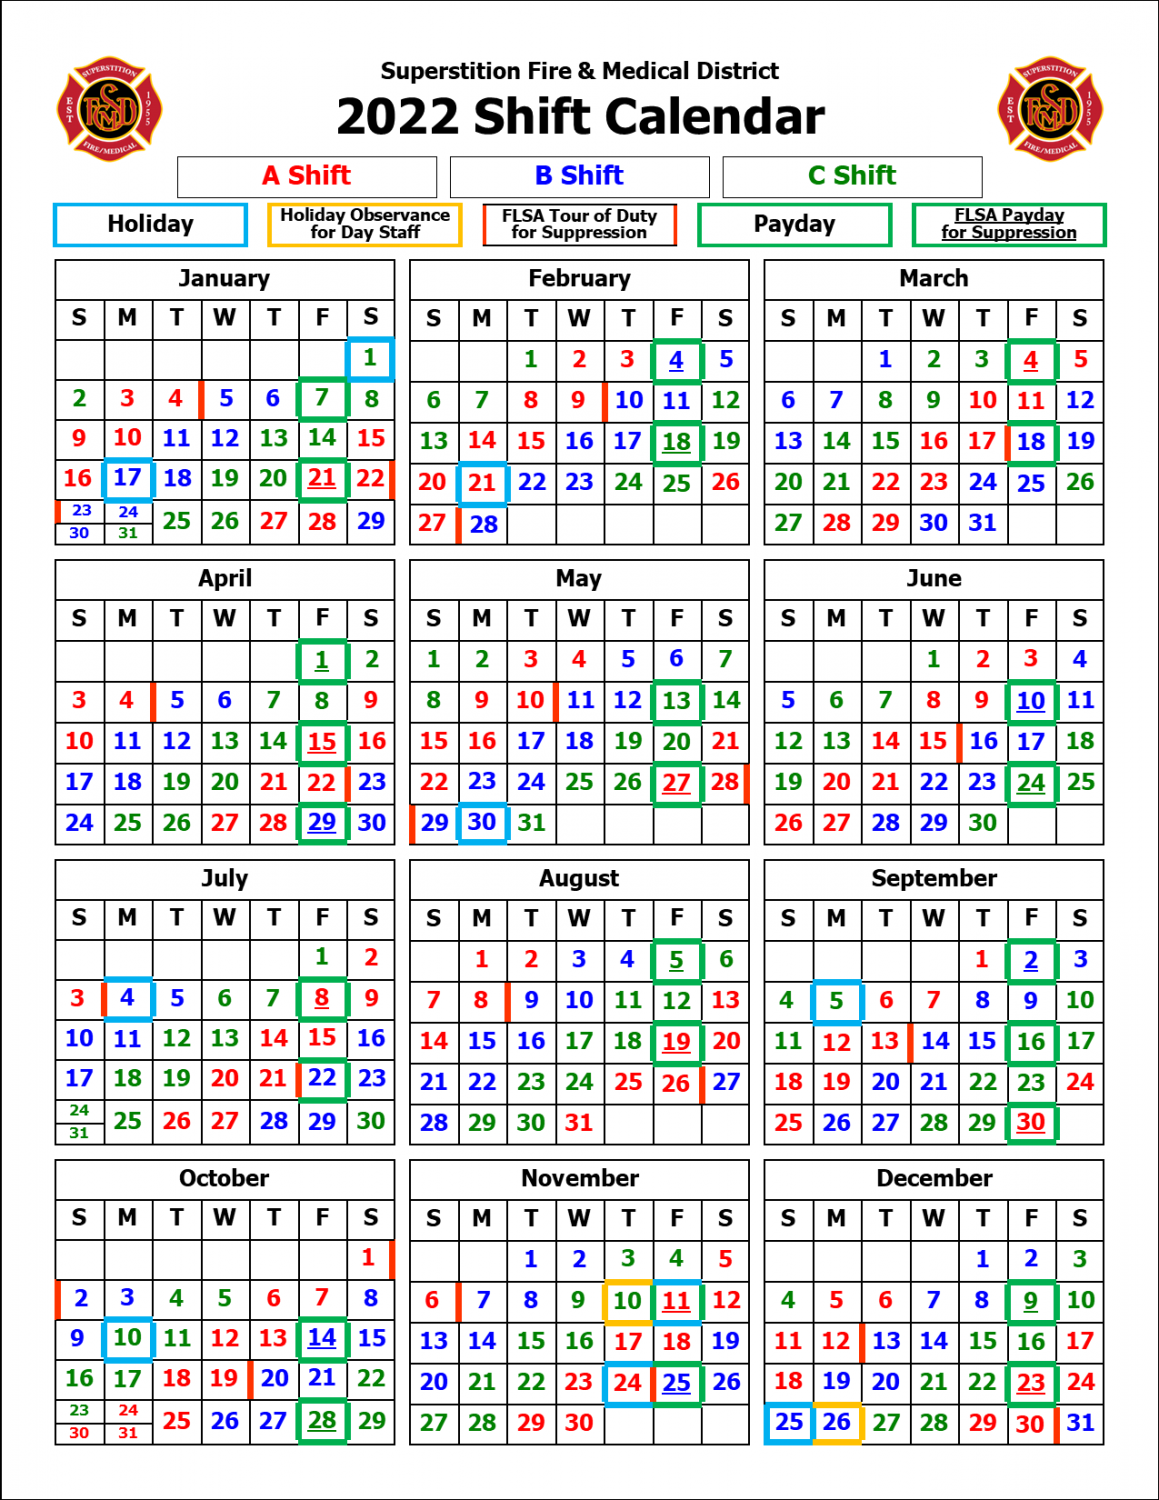 Shift Calendars Superstition Fire & Medical District